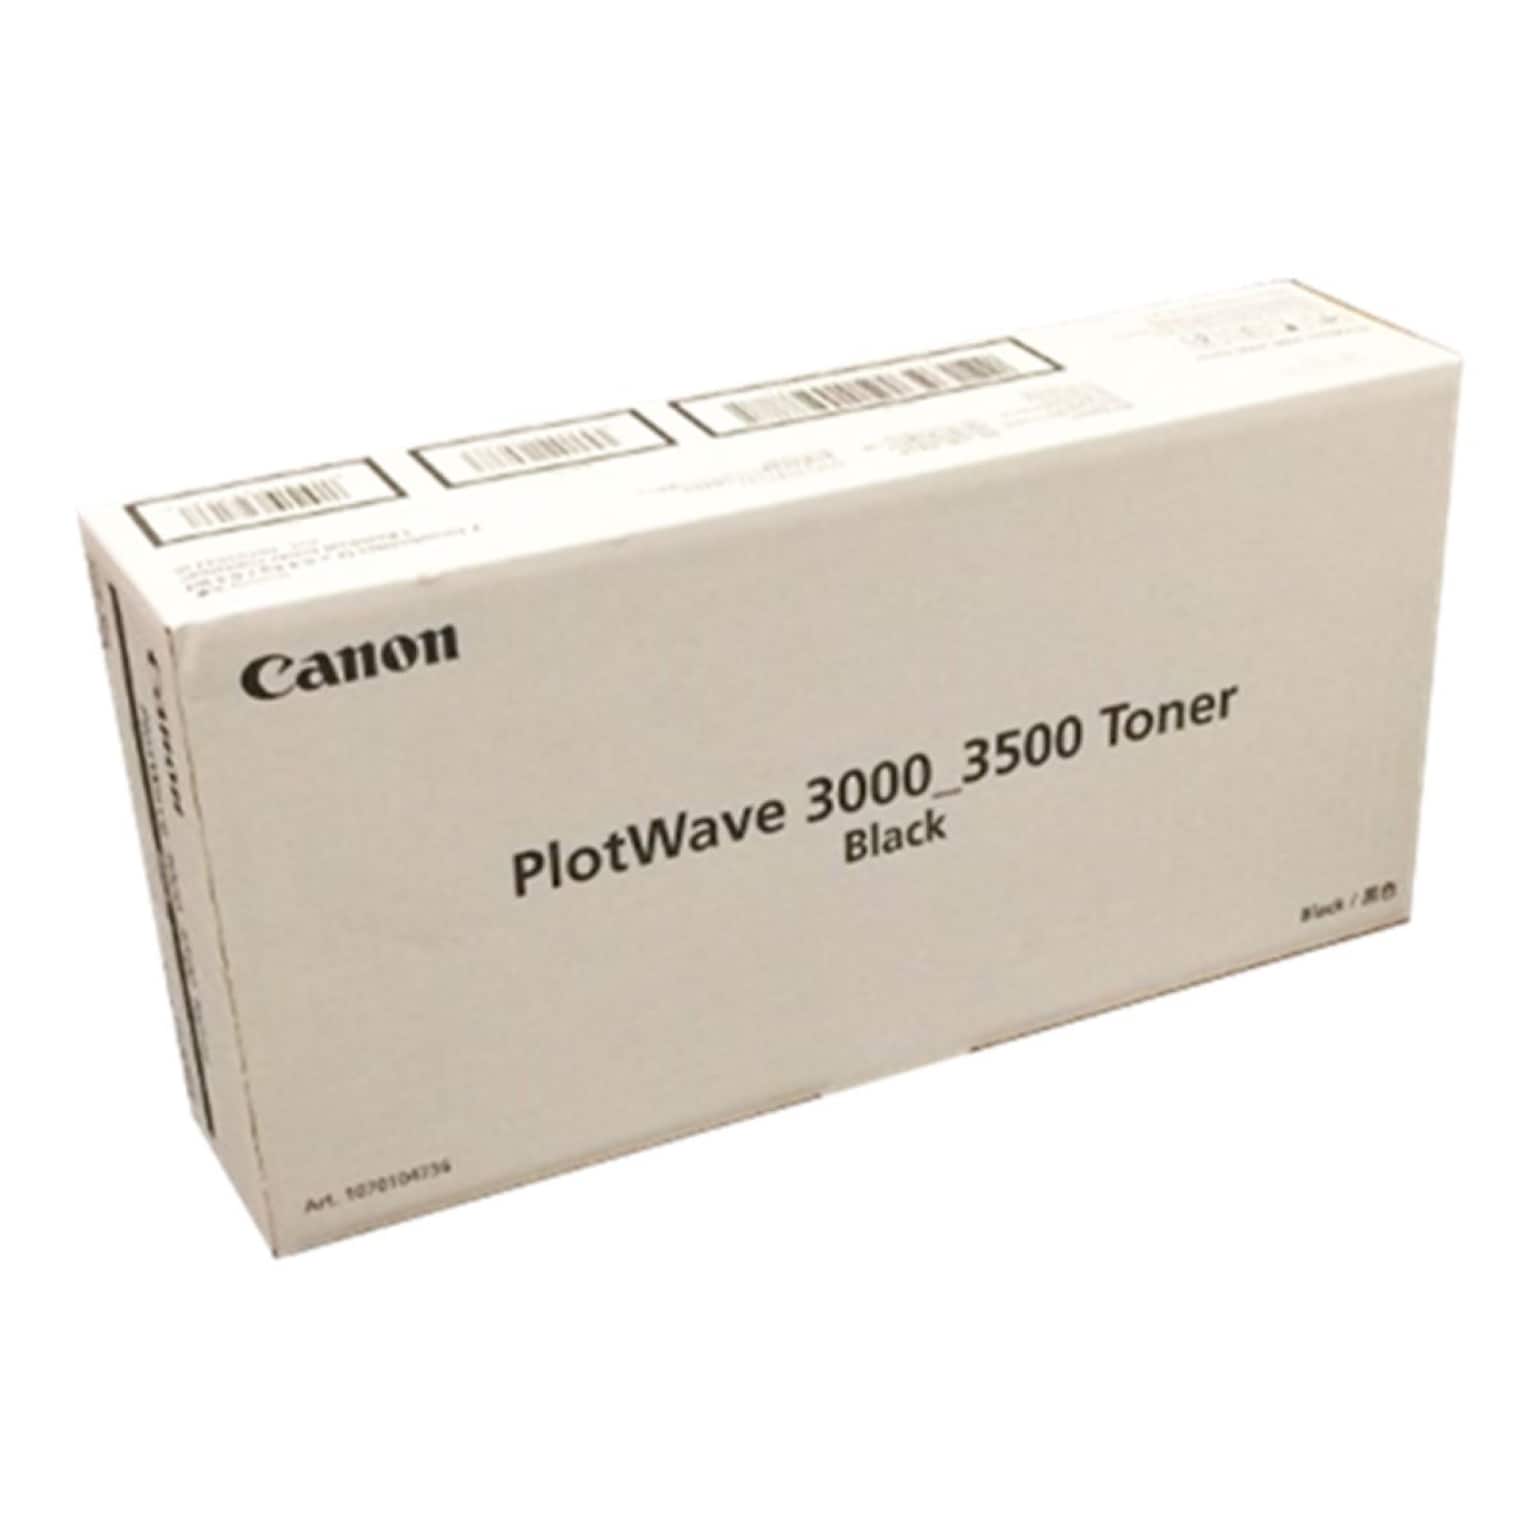 Oce PlotWave 3000/3500 Black Standard Yield Toner Cartridge, 2/Pack (4267C001)